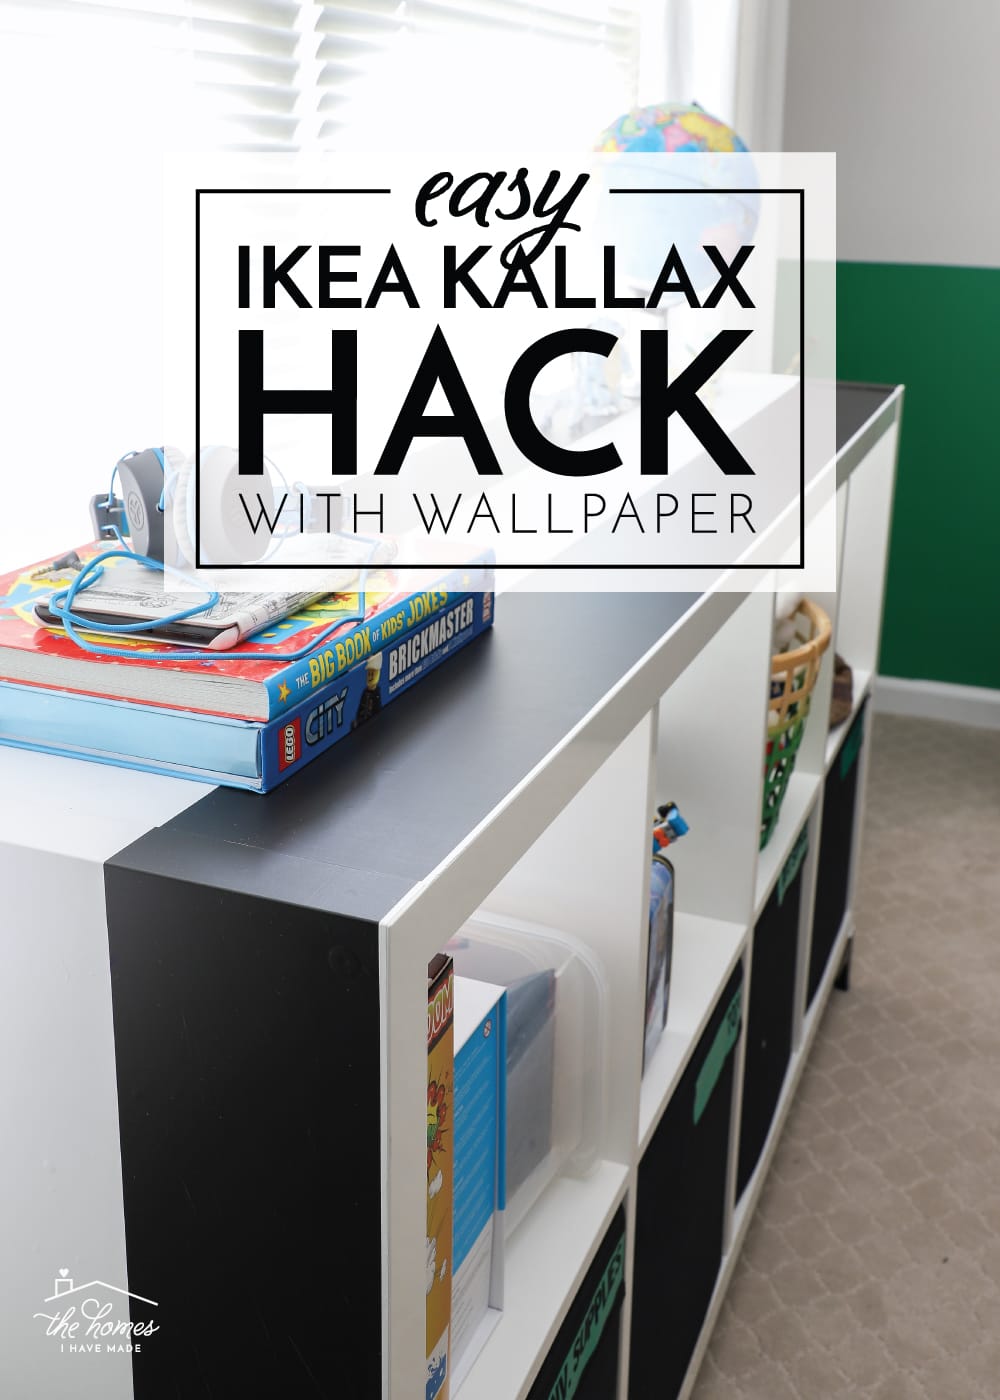 IKEA Kallax Hack